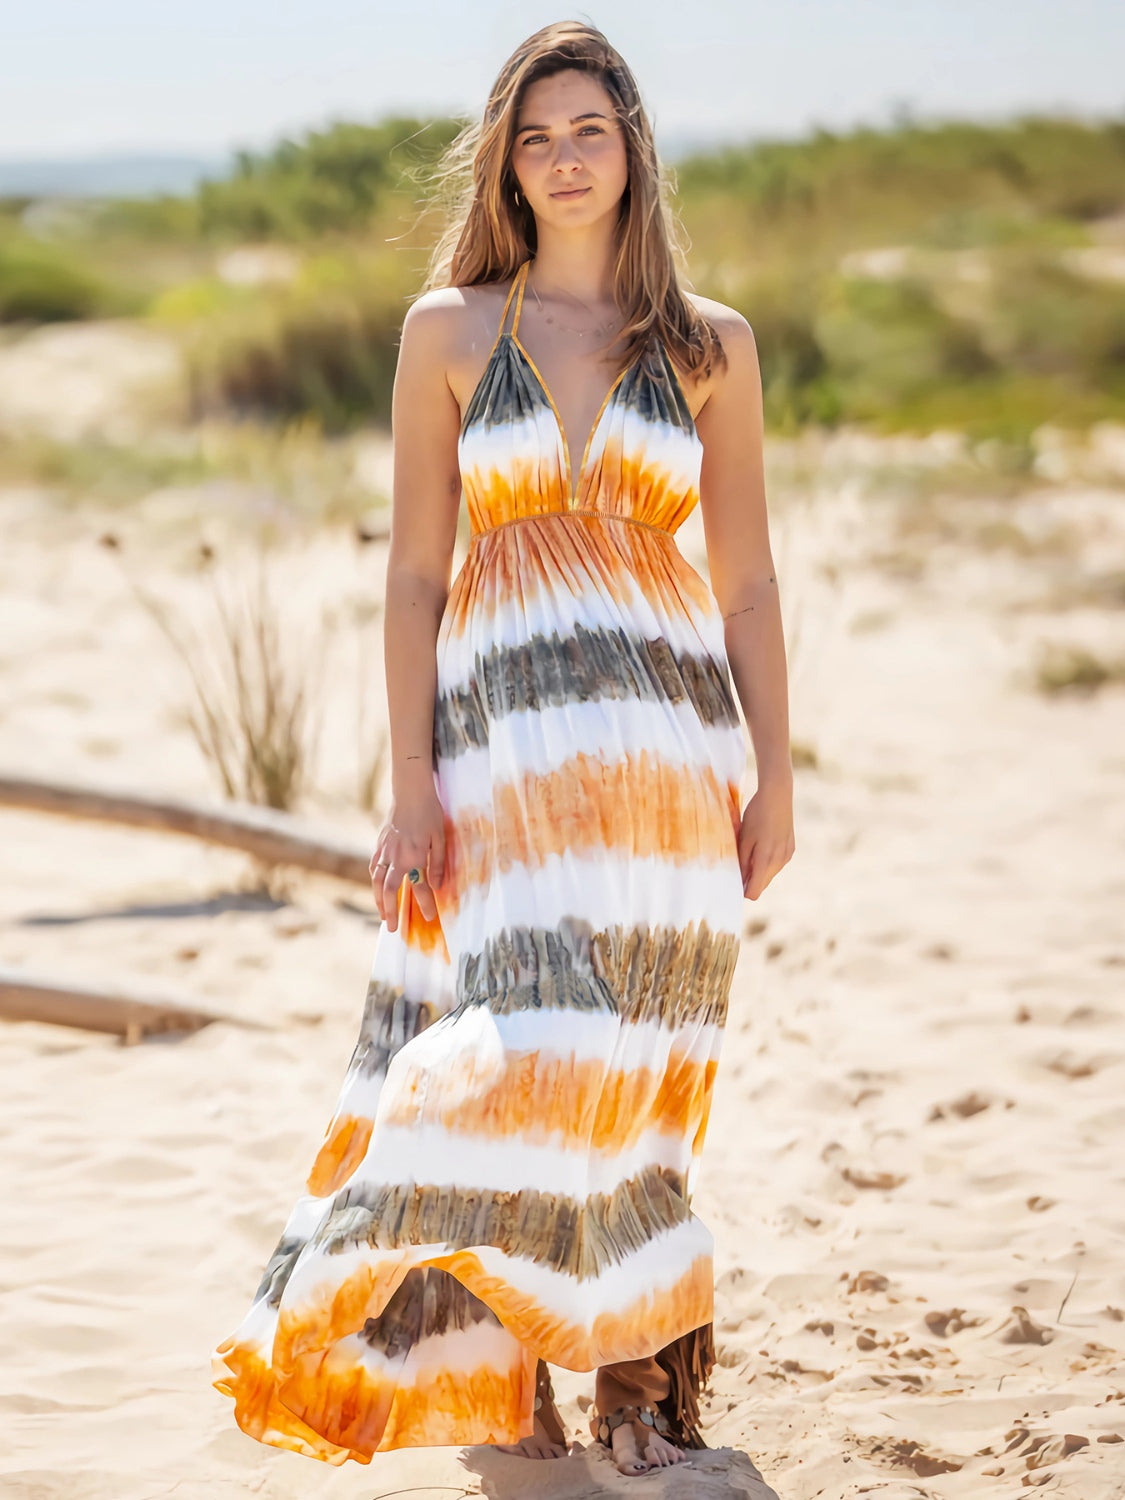 Beach Wedding Guest Attire for Women: Tie-Dye Sleeveless Halter Neck Dress